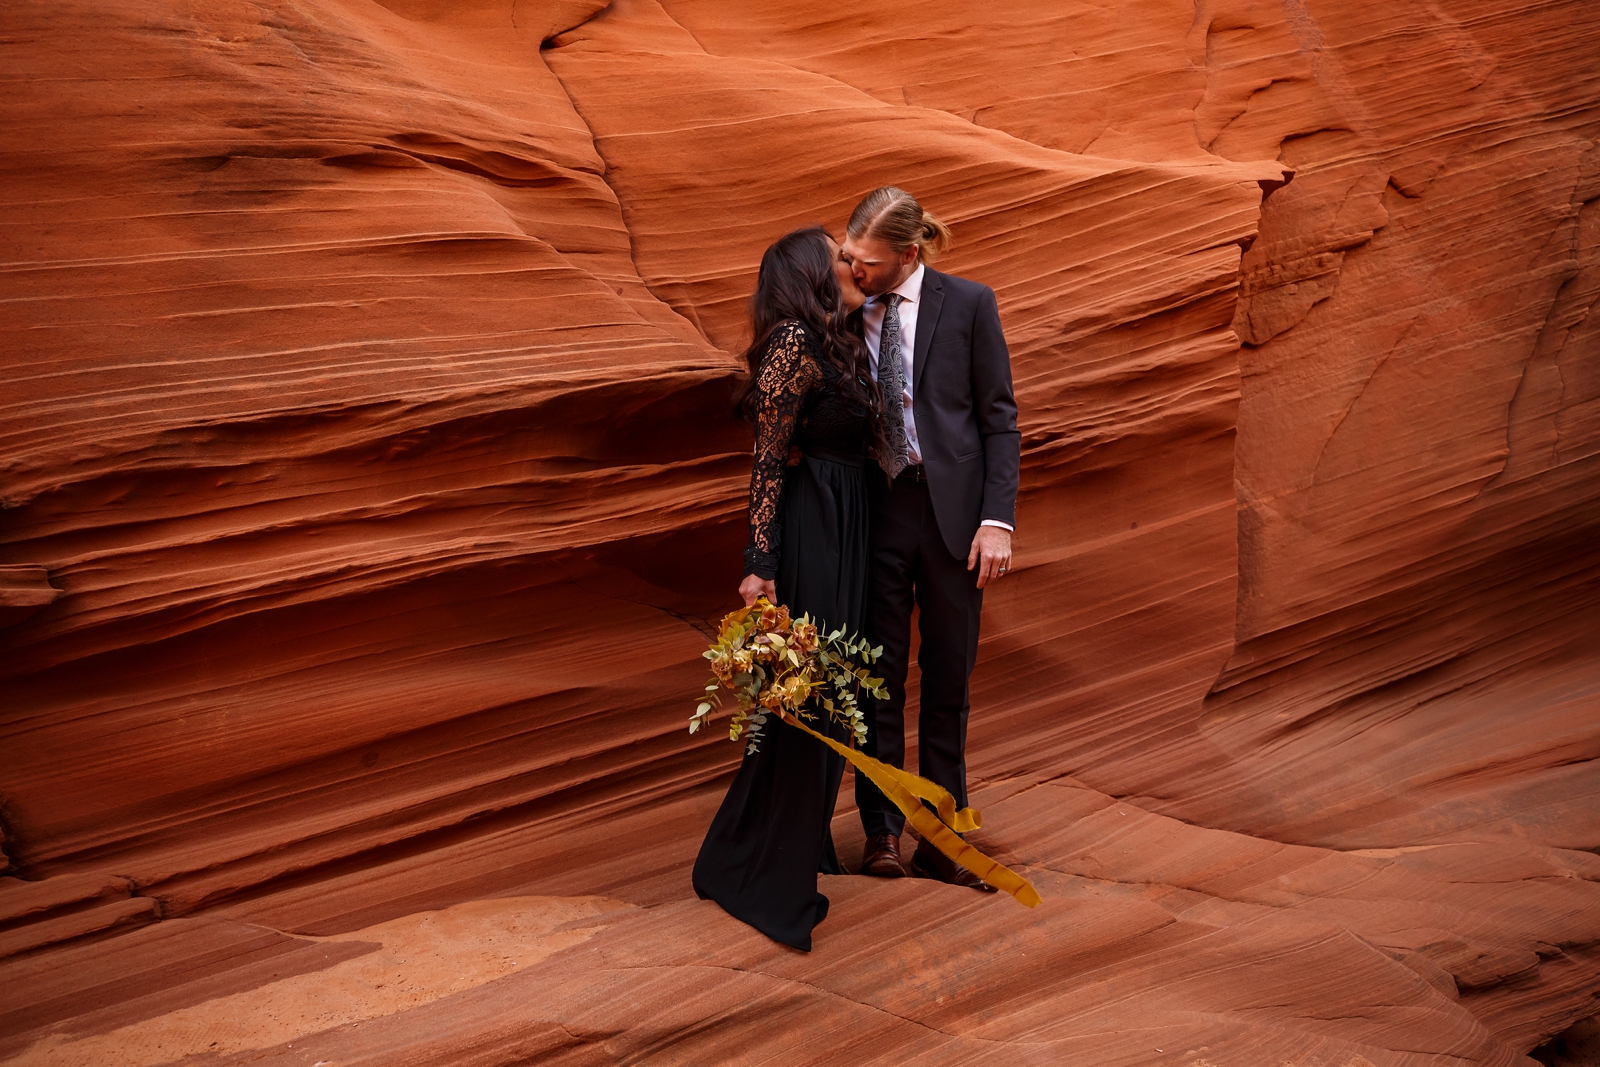 Couple kissing in an Arizona slot canyon.